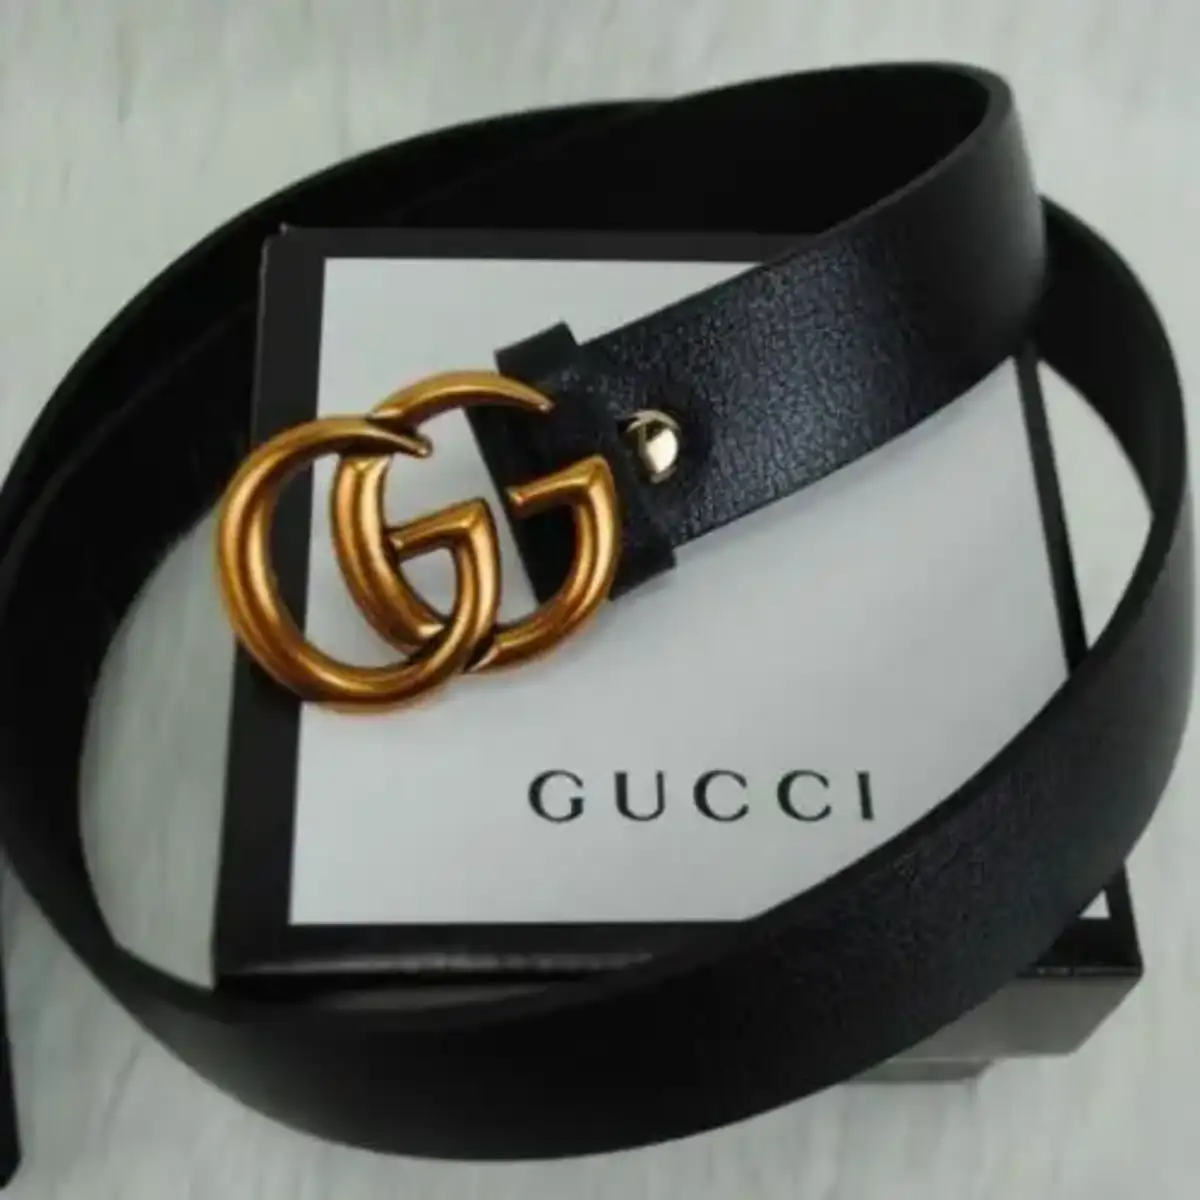 Gucci belt dupe dhgate